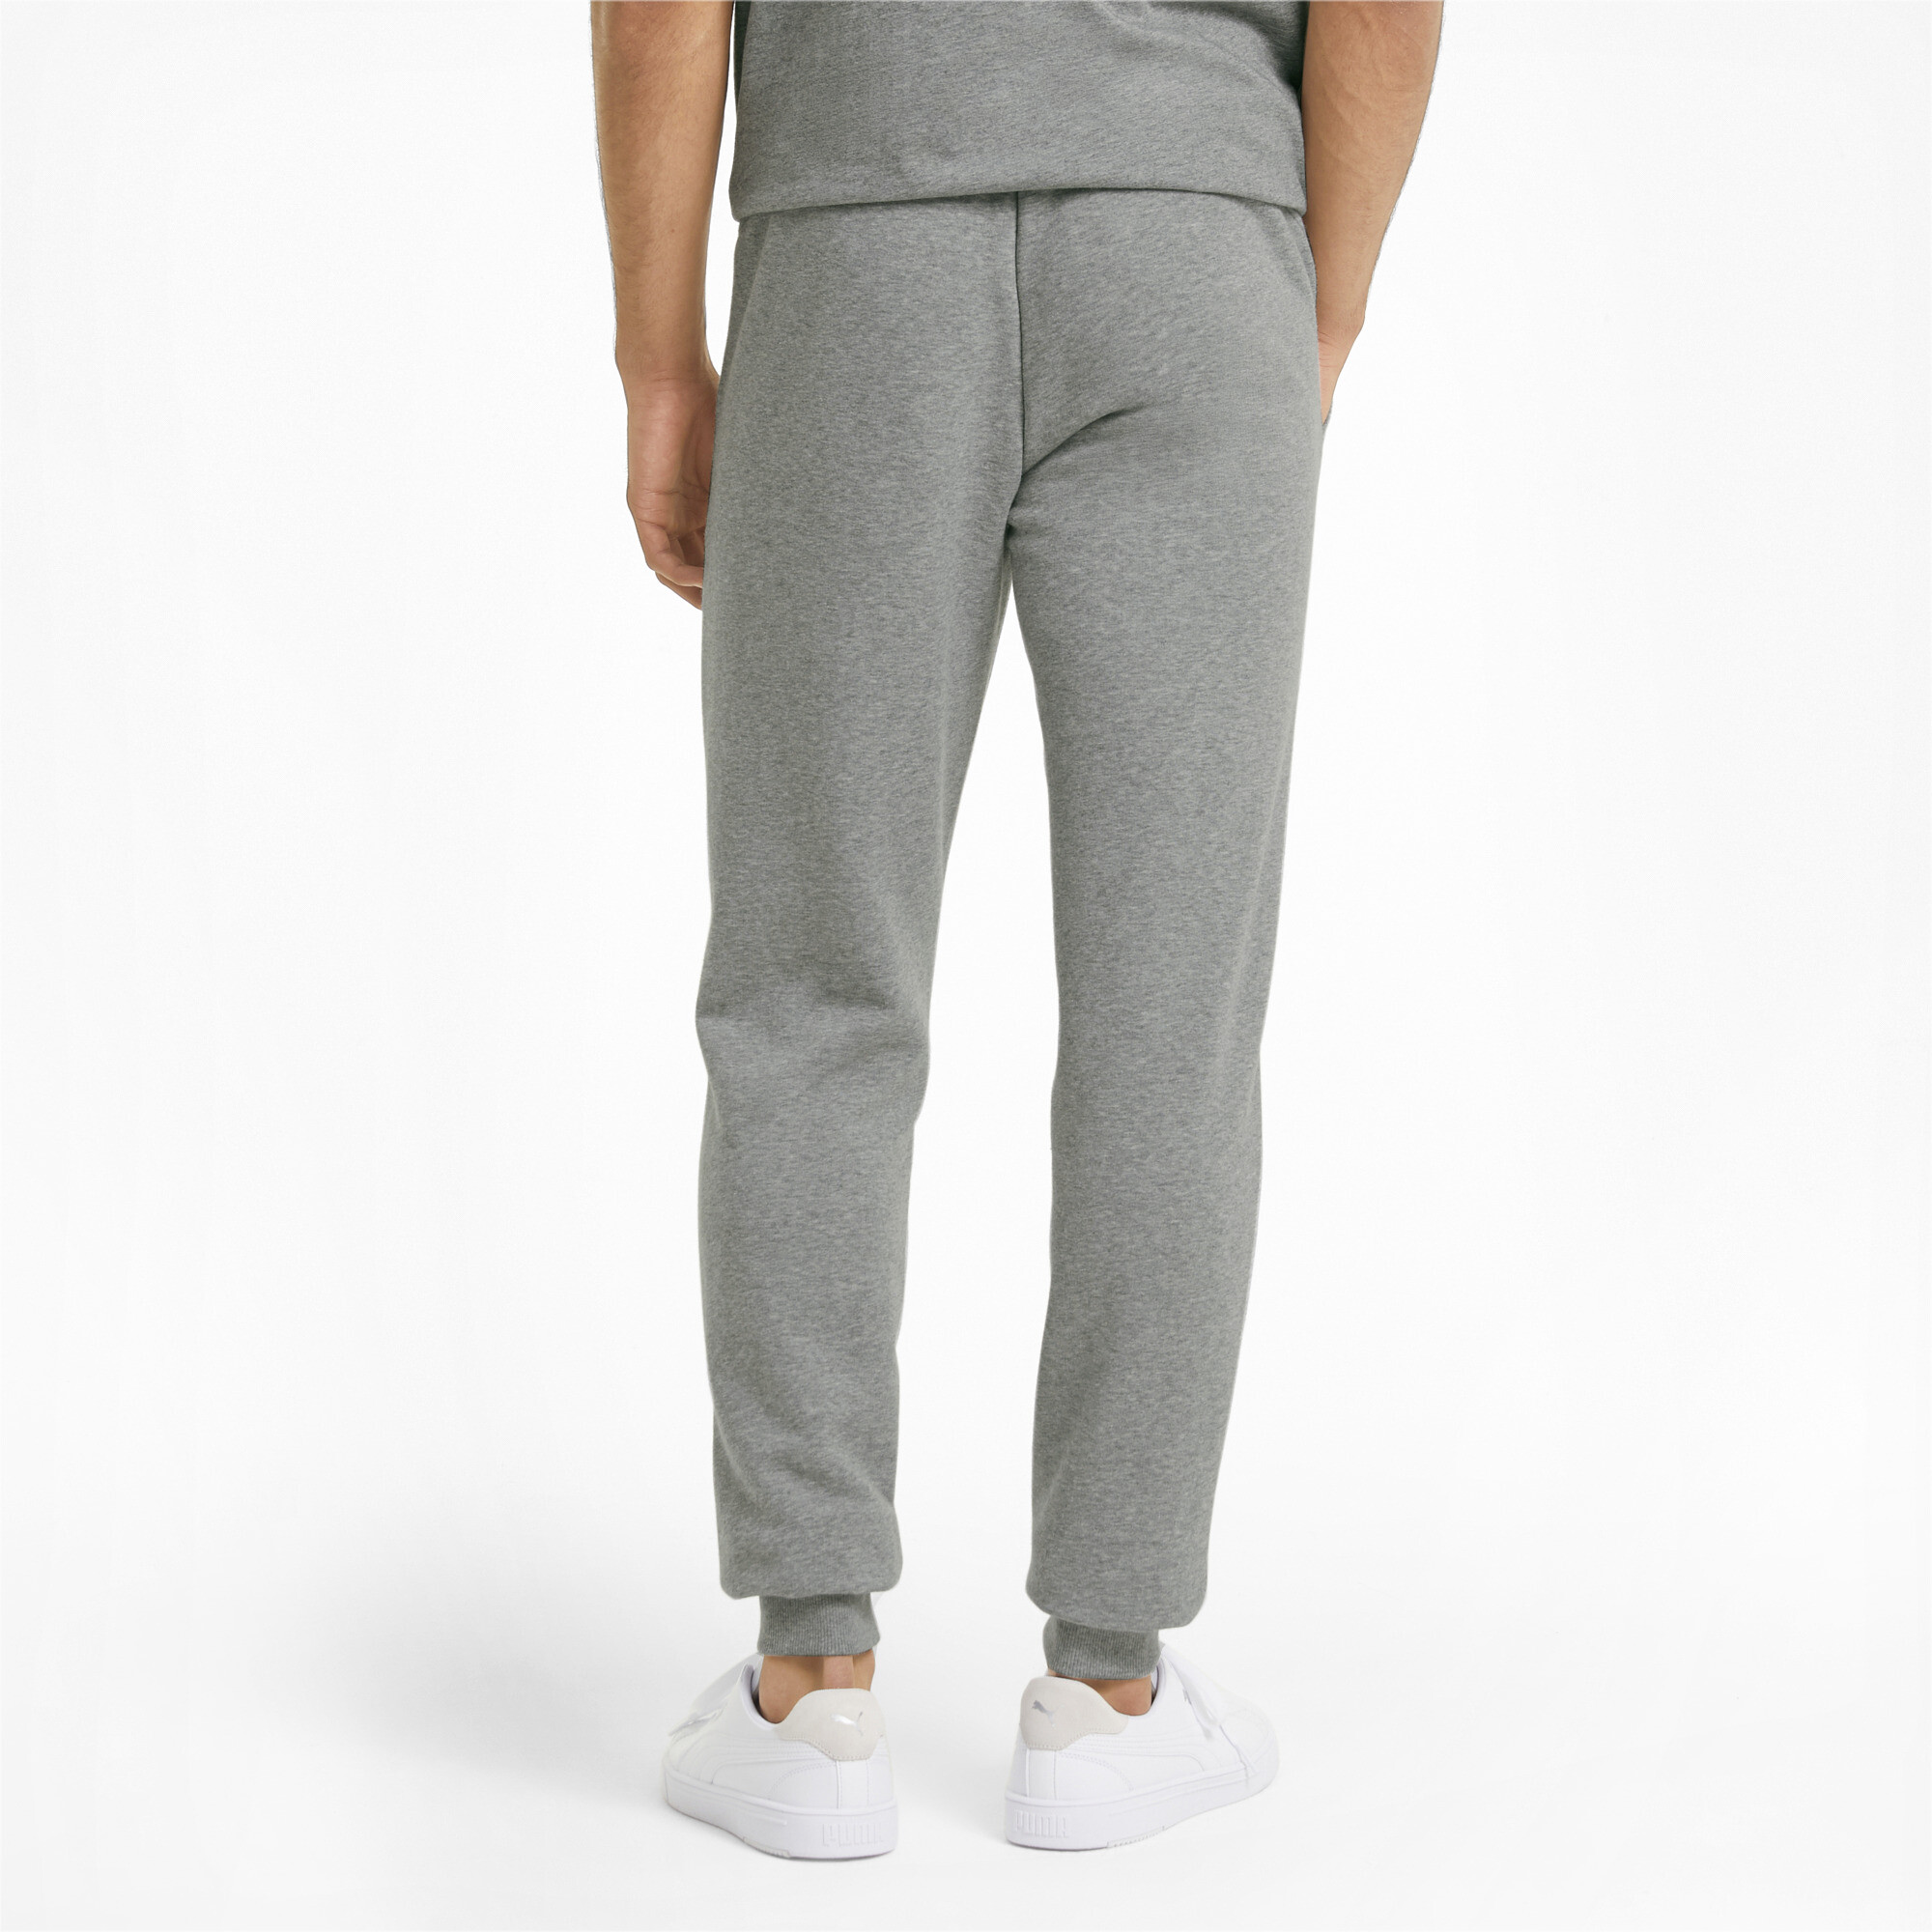 Men's Puma Essentials Slim's Pants, Gray, Size XXS, Clothing